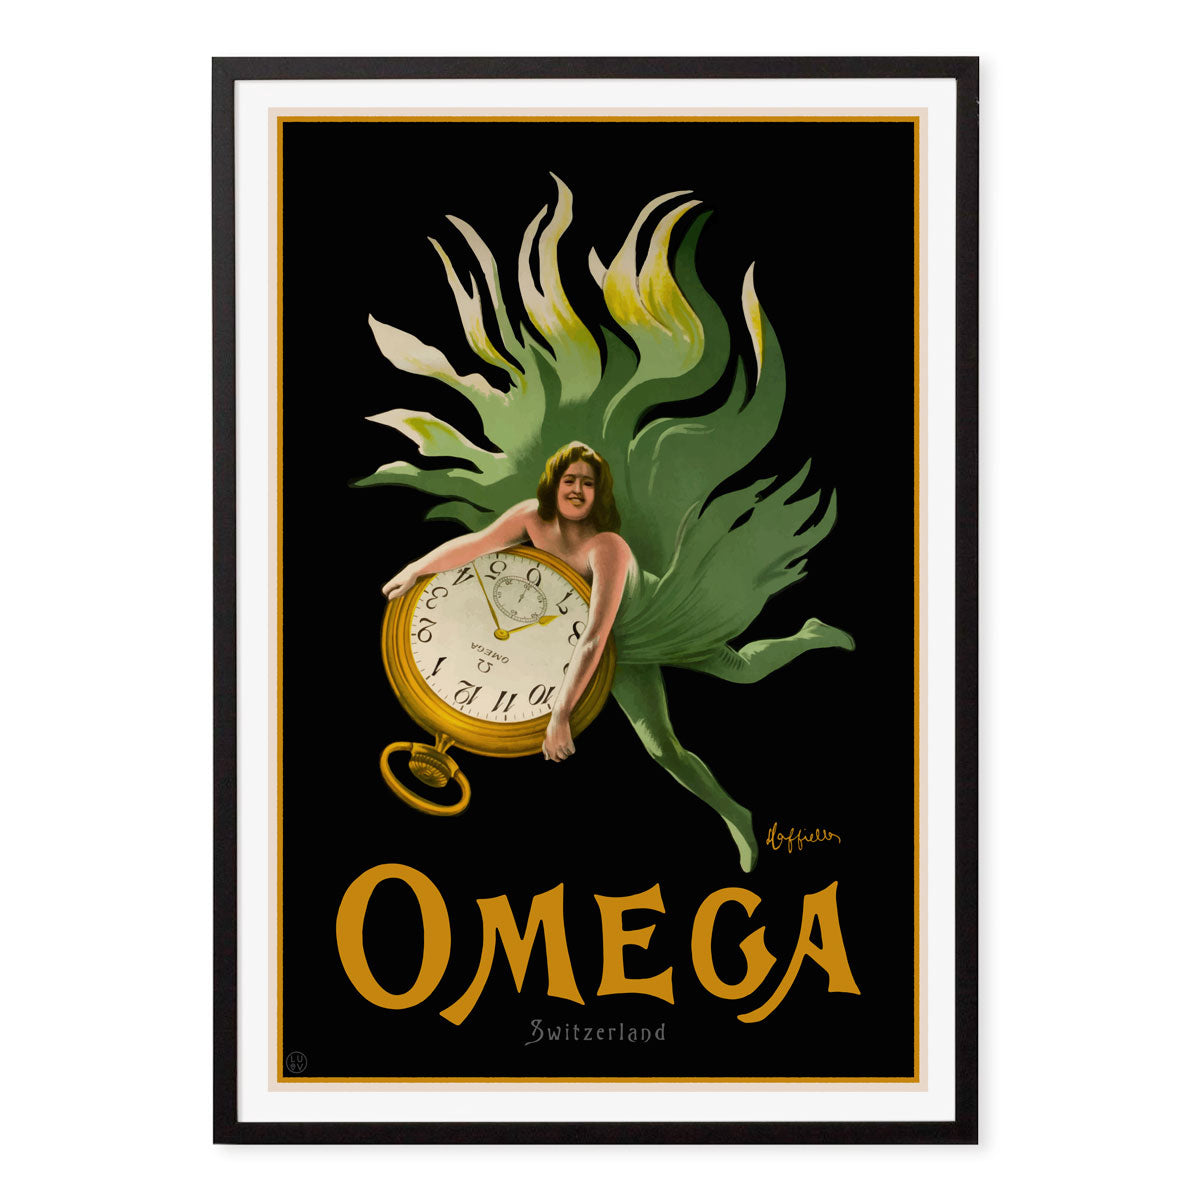 Omega Switzerland retro vintage advertising poster in black frame - Places We Luv